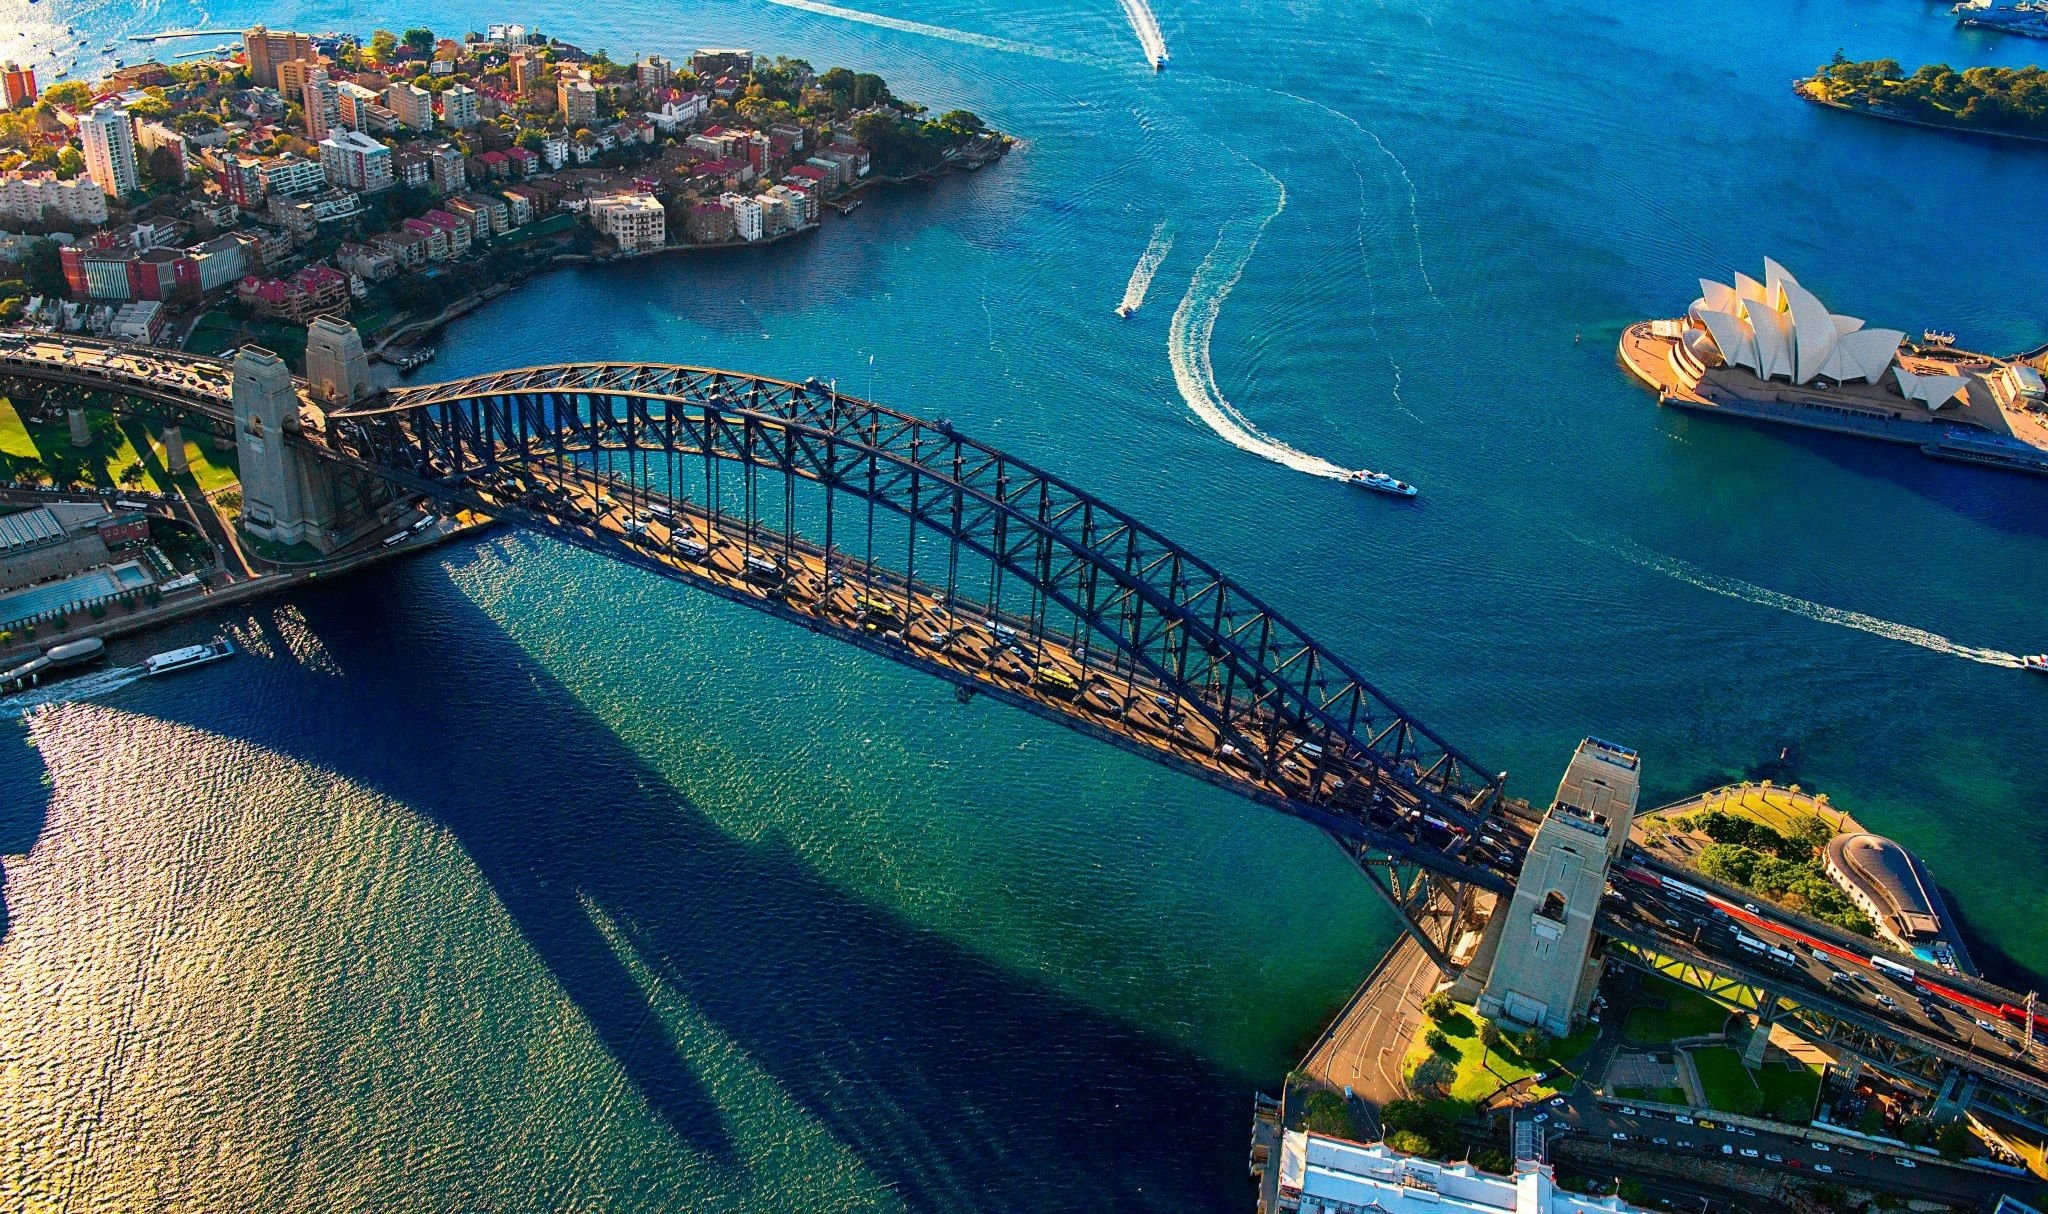 Harbour bridge. Сиднейский мост Харбор-бридж. Сиднейский Харбор-бридж, Австралия. Мост Харбор бридж в Австралии. Мост в Сиднее Австралия.